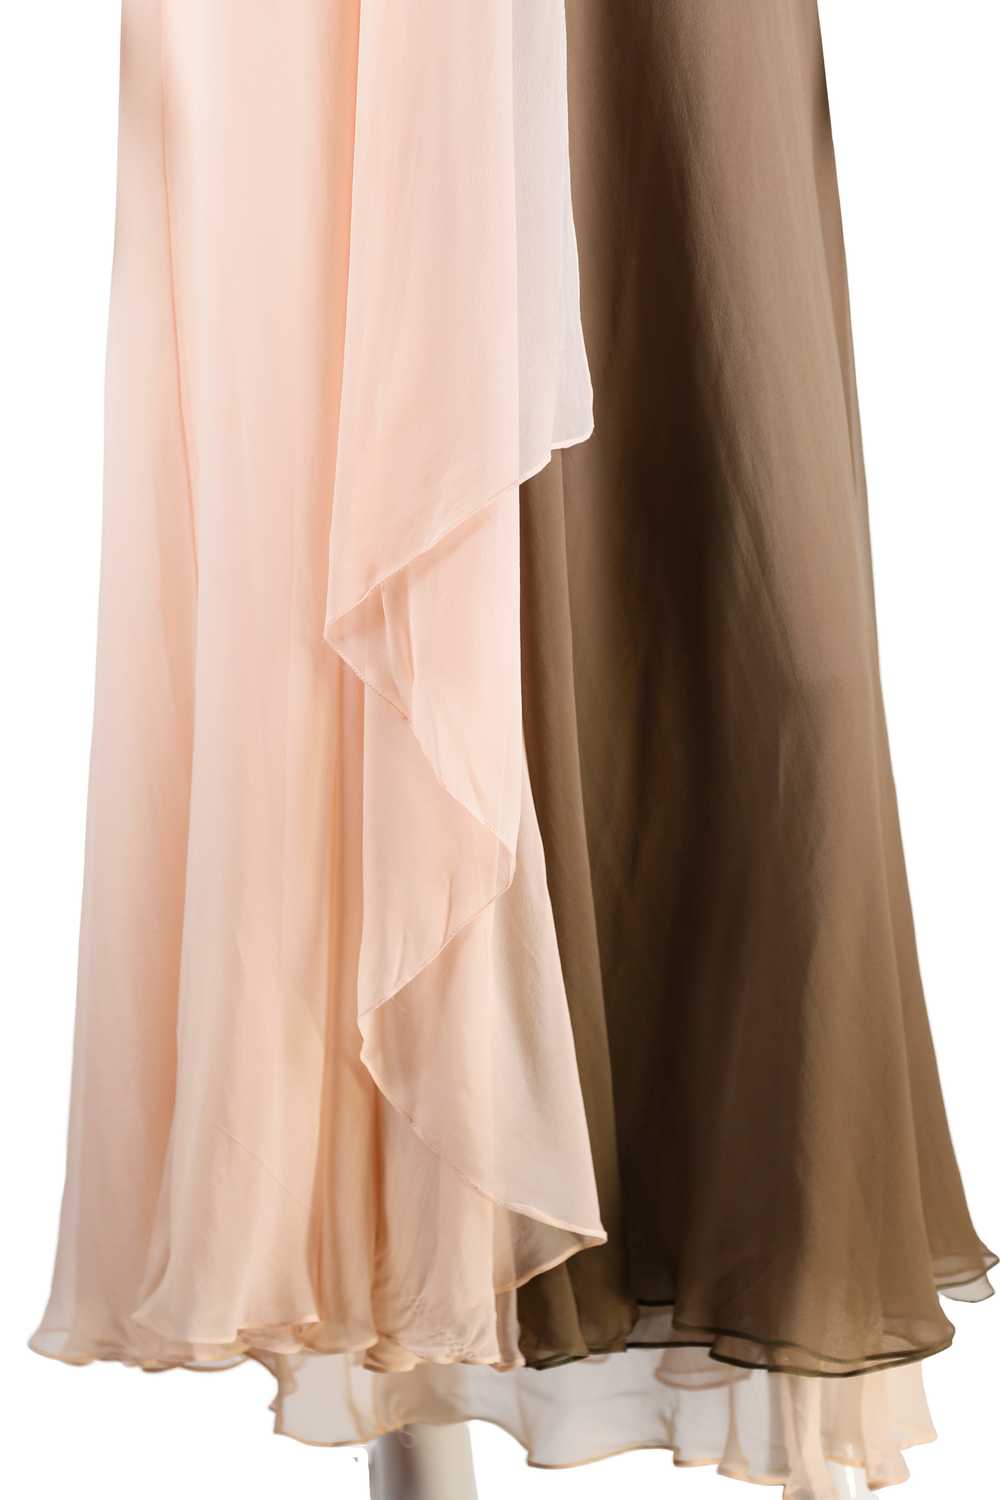 Bill Blass Grecian Silk Chiffon Gown - image 5